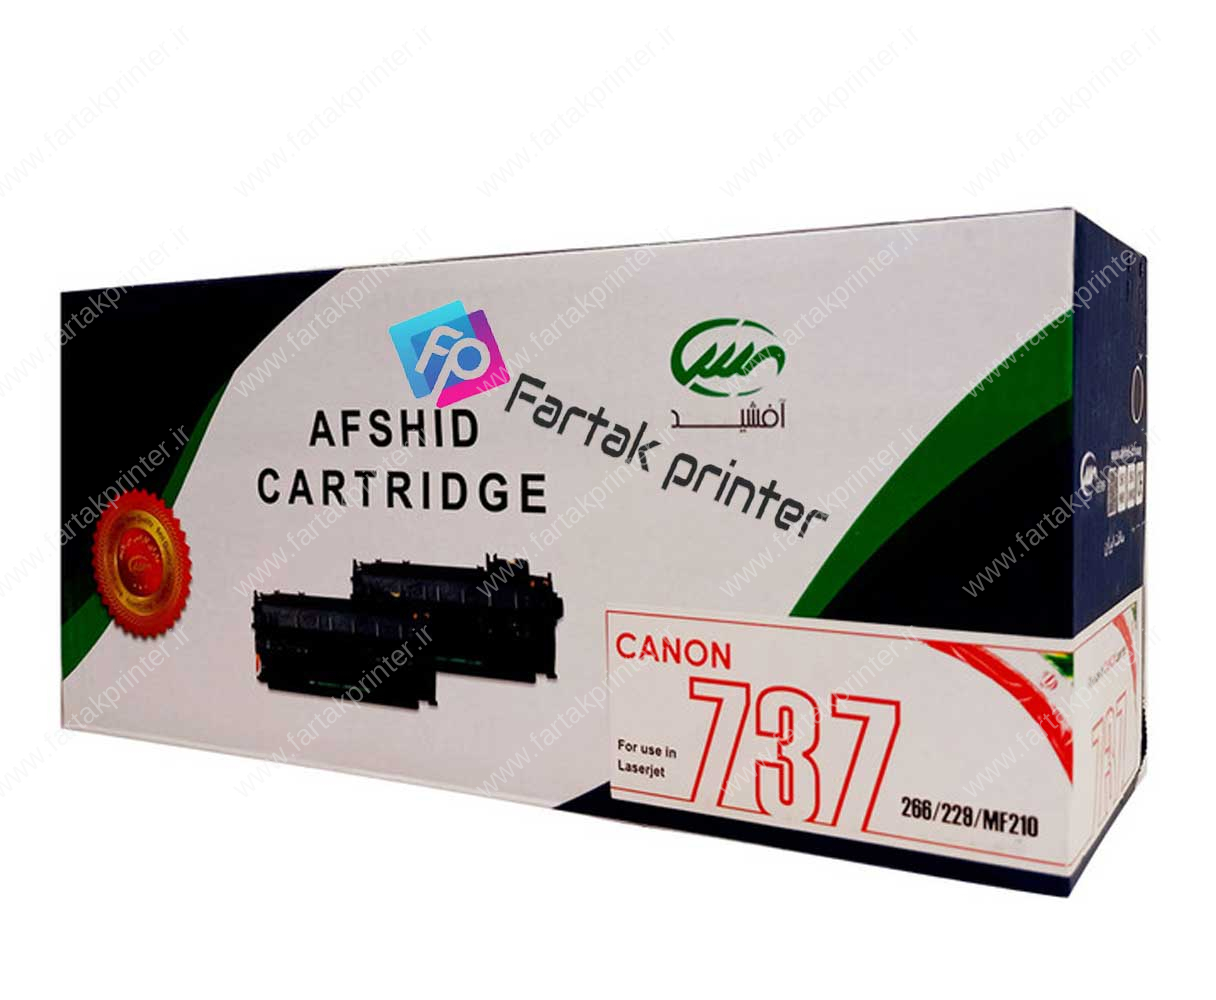  Canon 737 Black Laser Toner Cartridge afshid